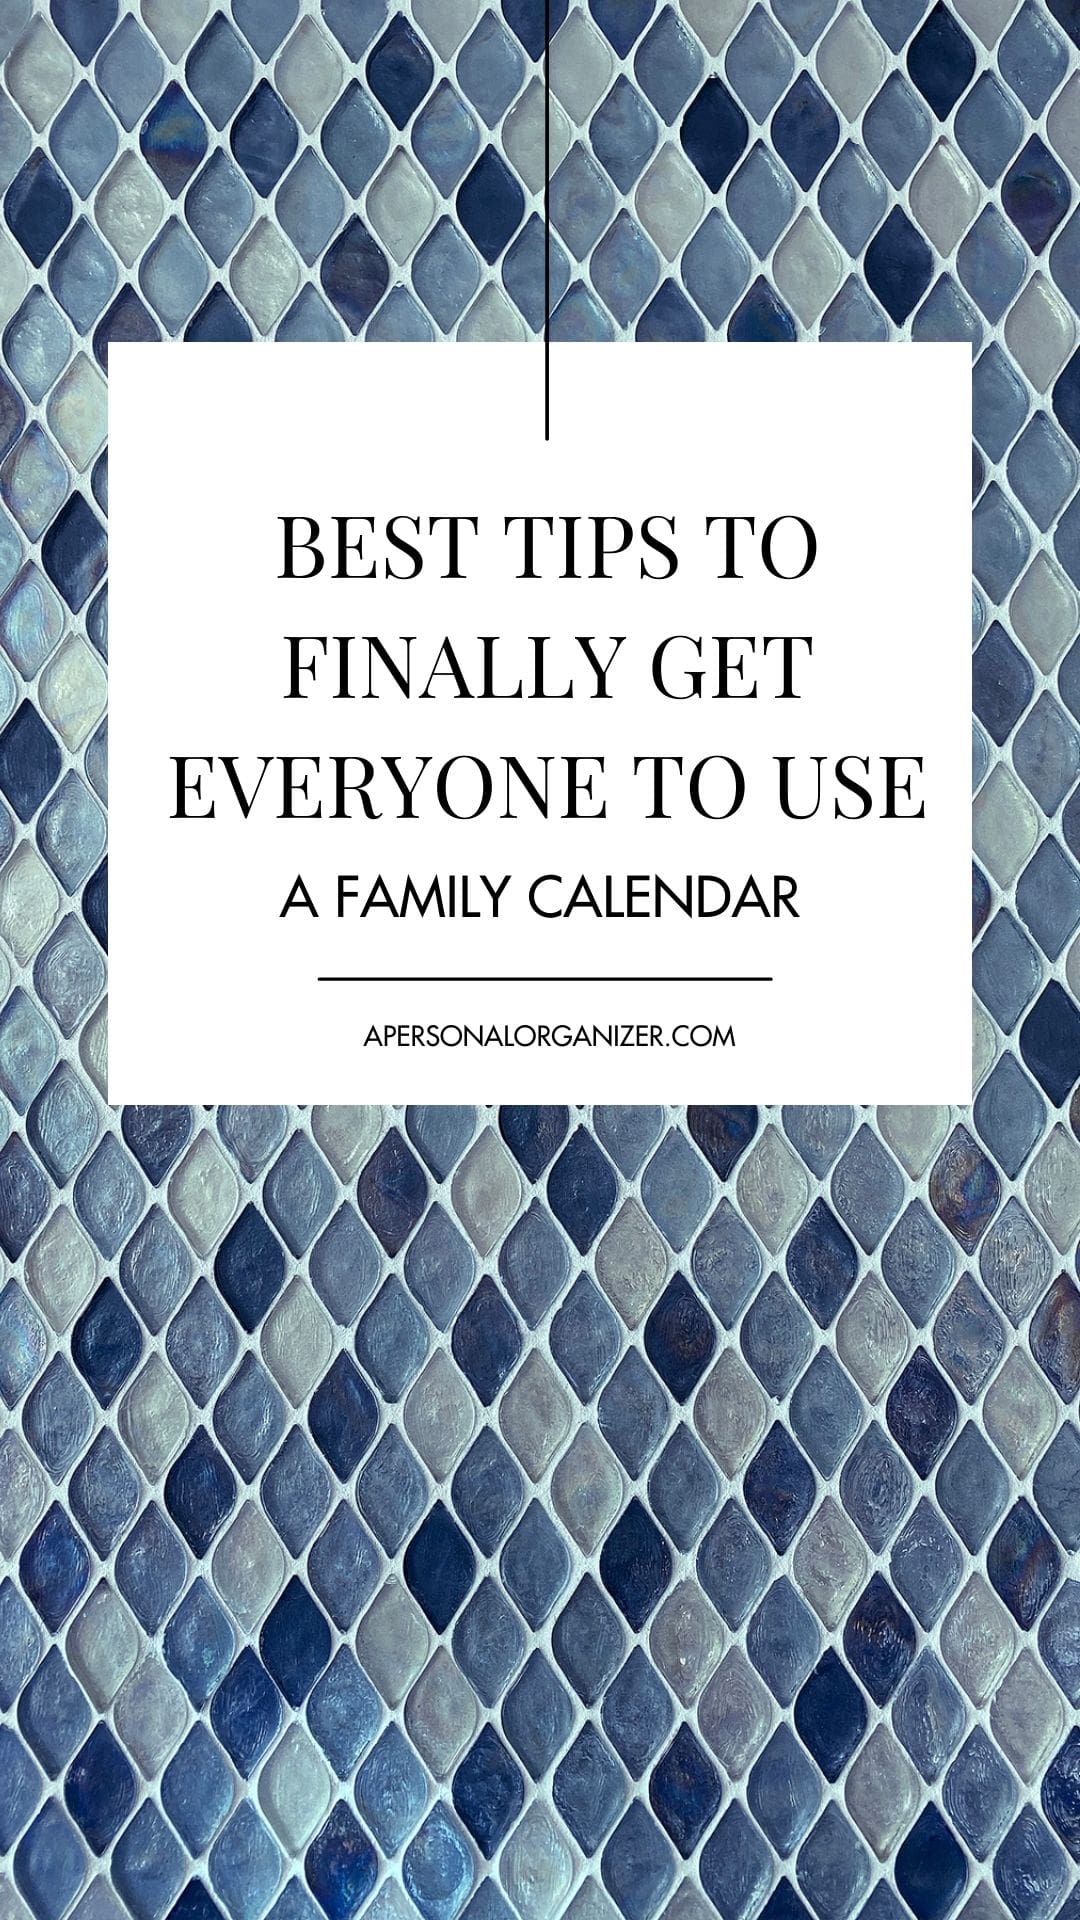 Use a Family Calendar to make your life as a parent easier